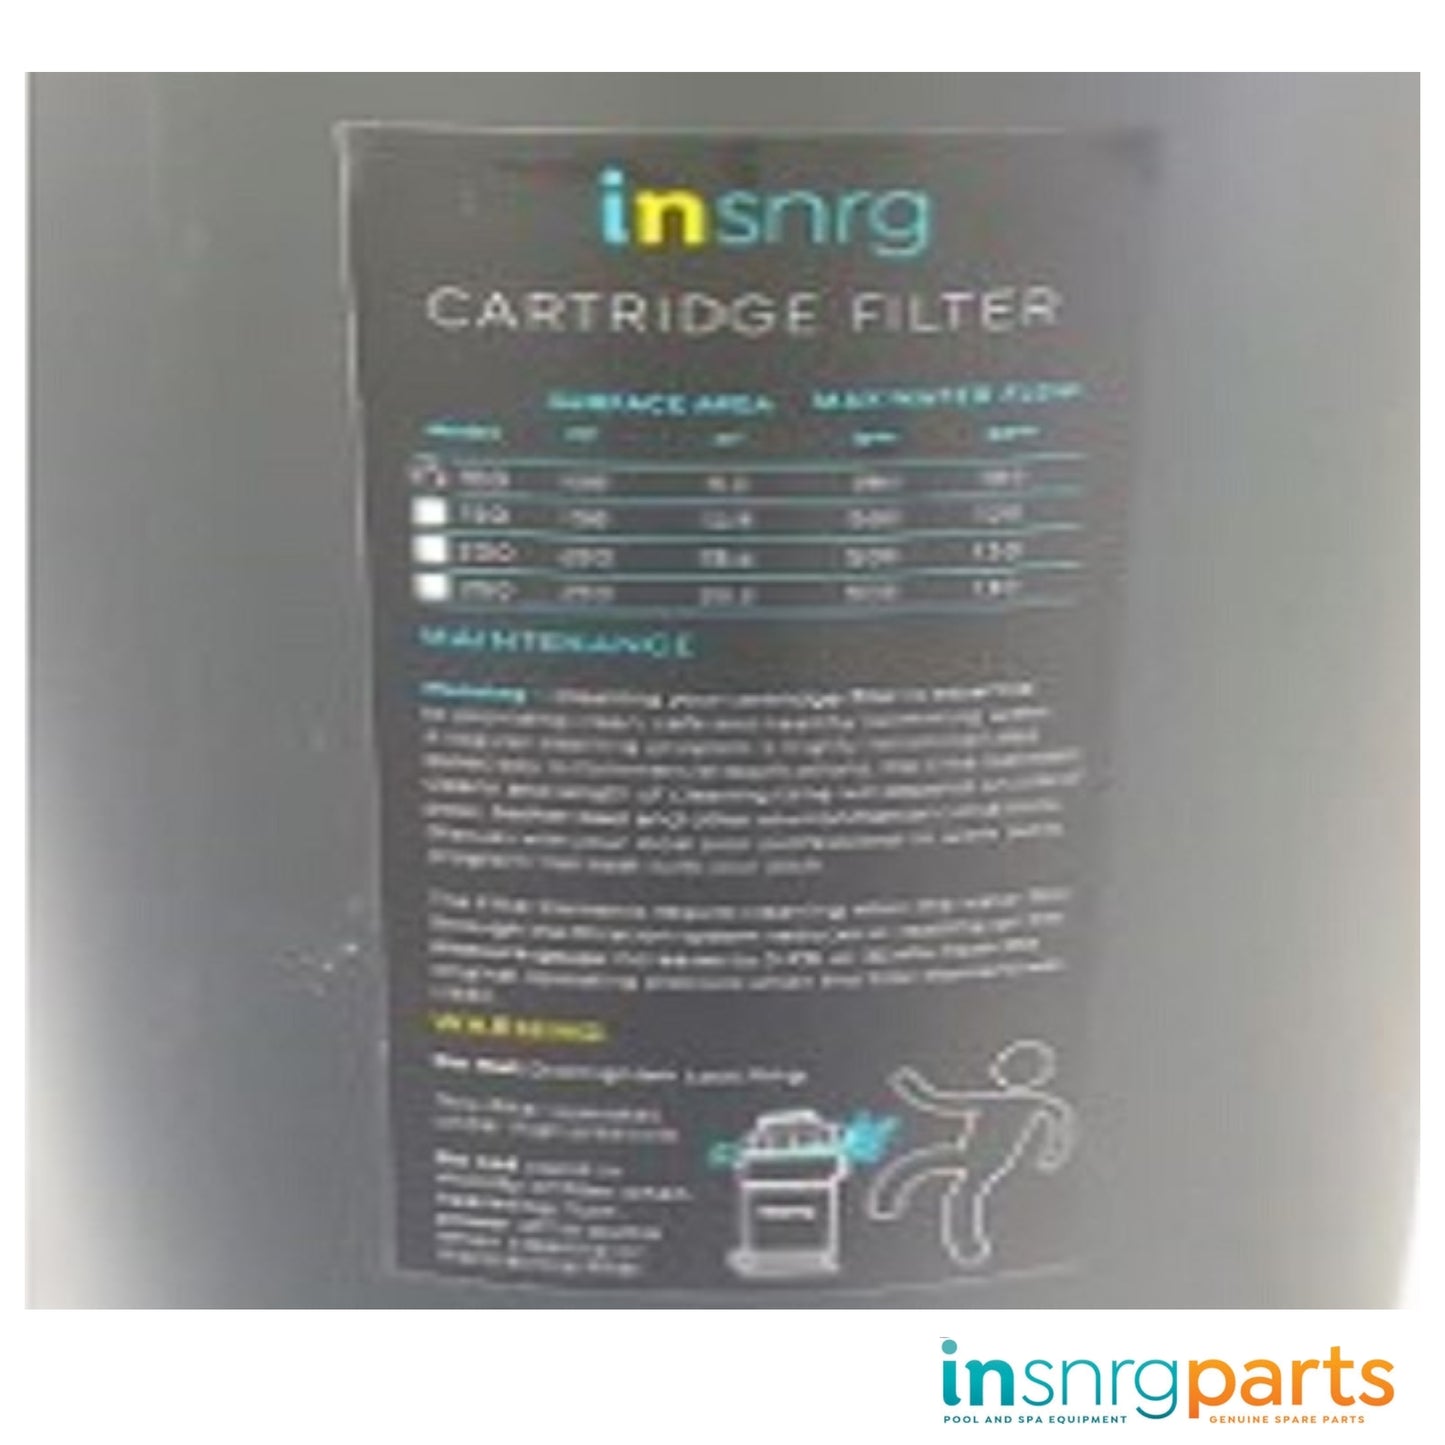 Cartridge Filter Body - Insnrg Ci Cartridge Filters [16120401001]